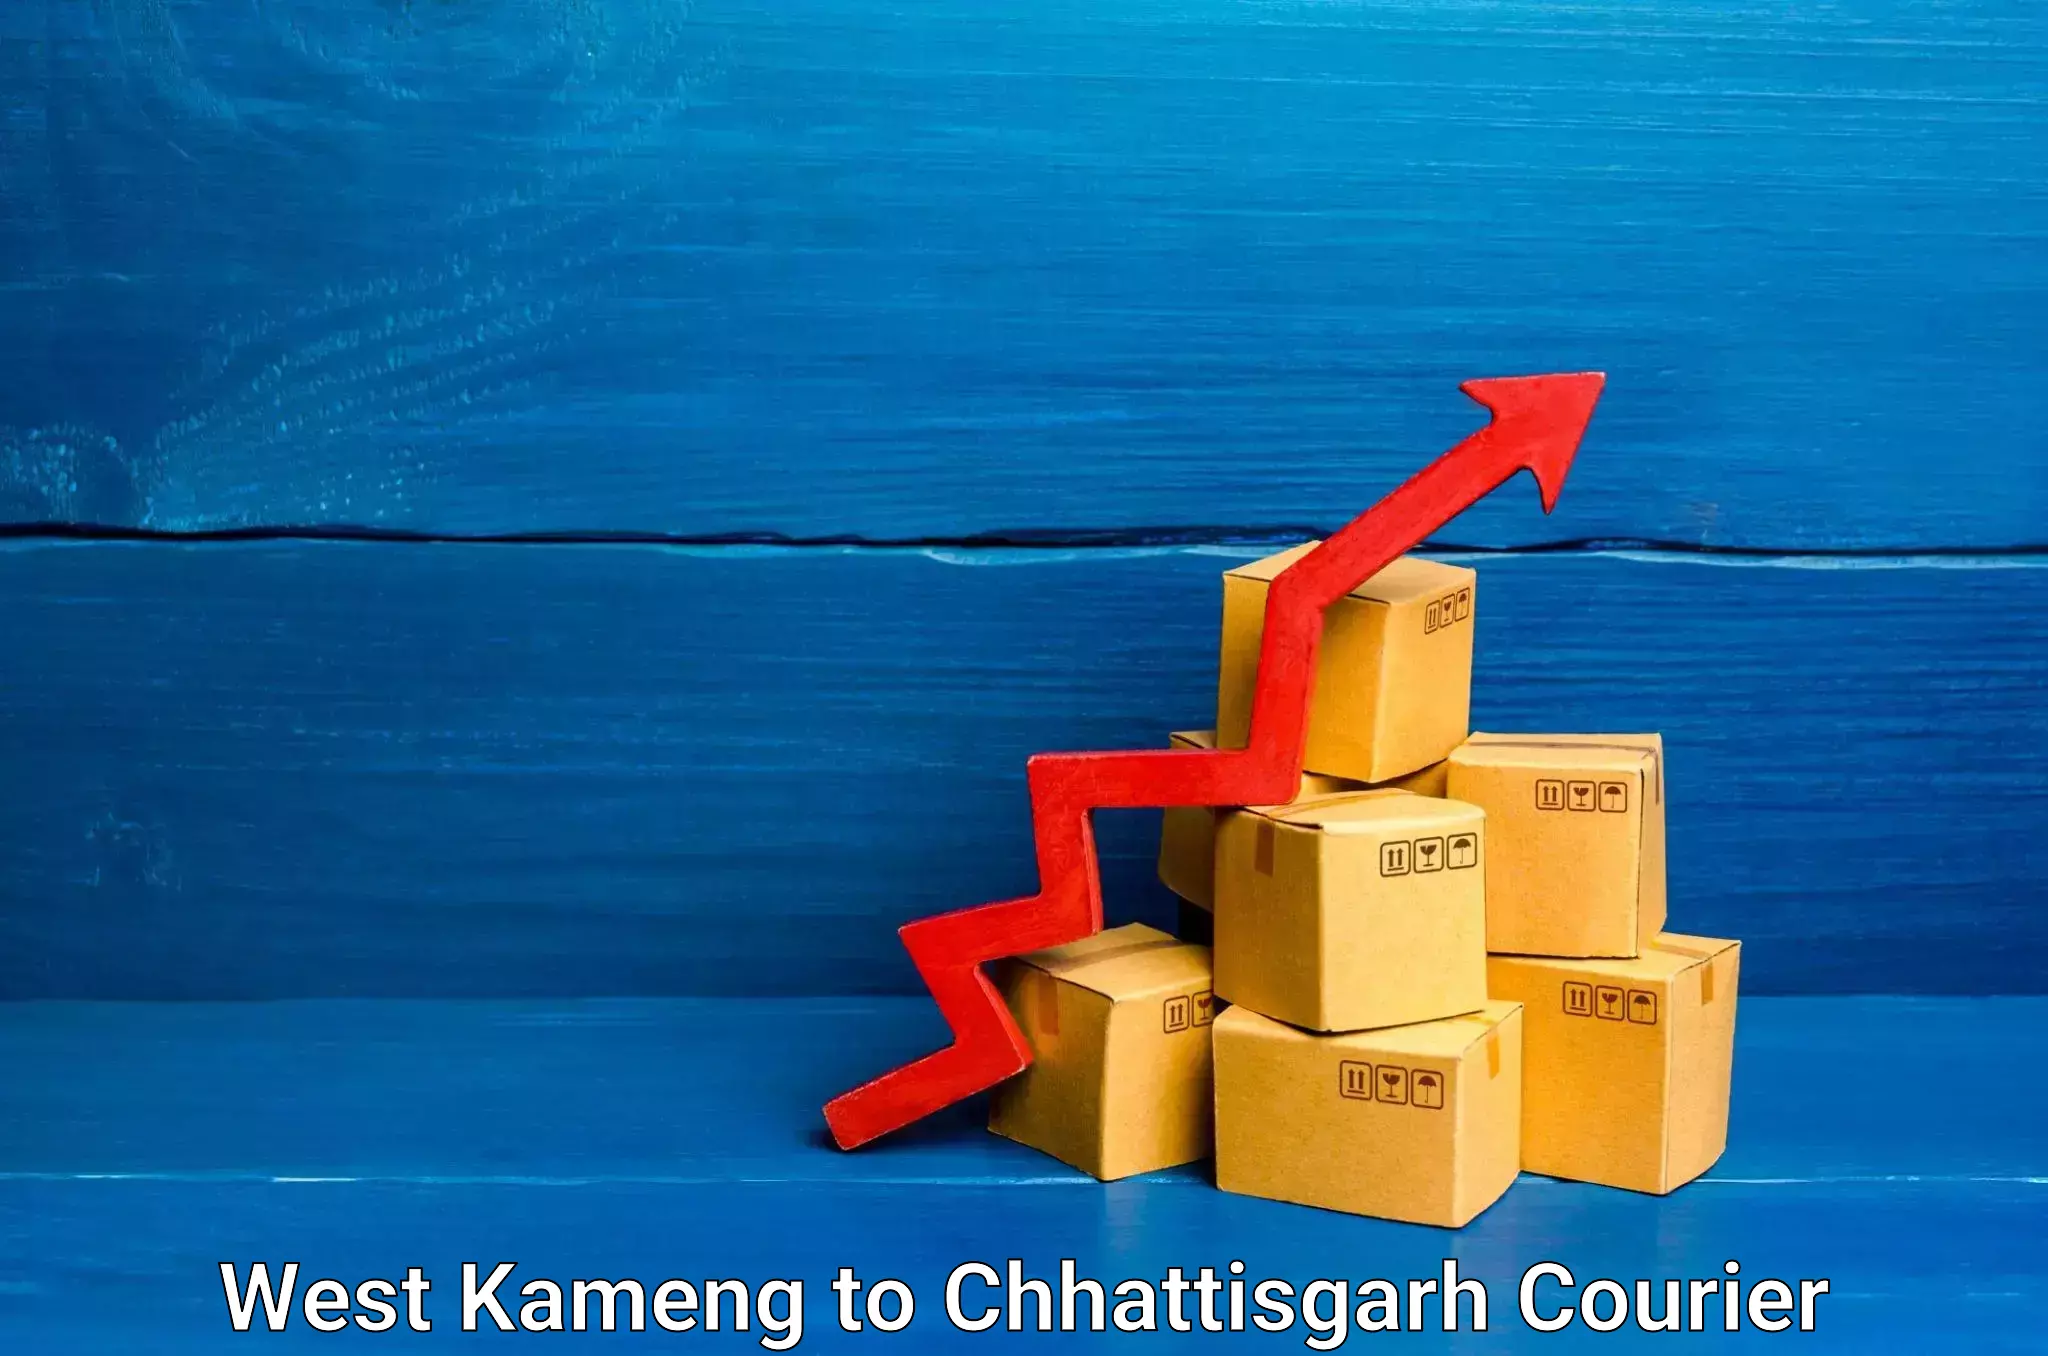 Global logistics network West Kameng to Korea Chhattisgarh